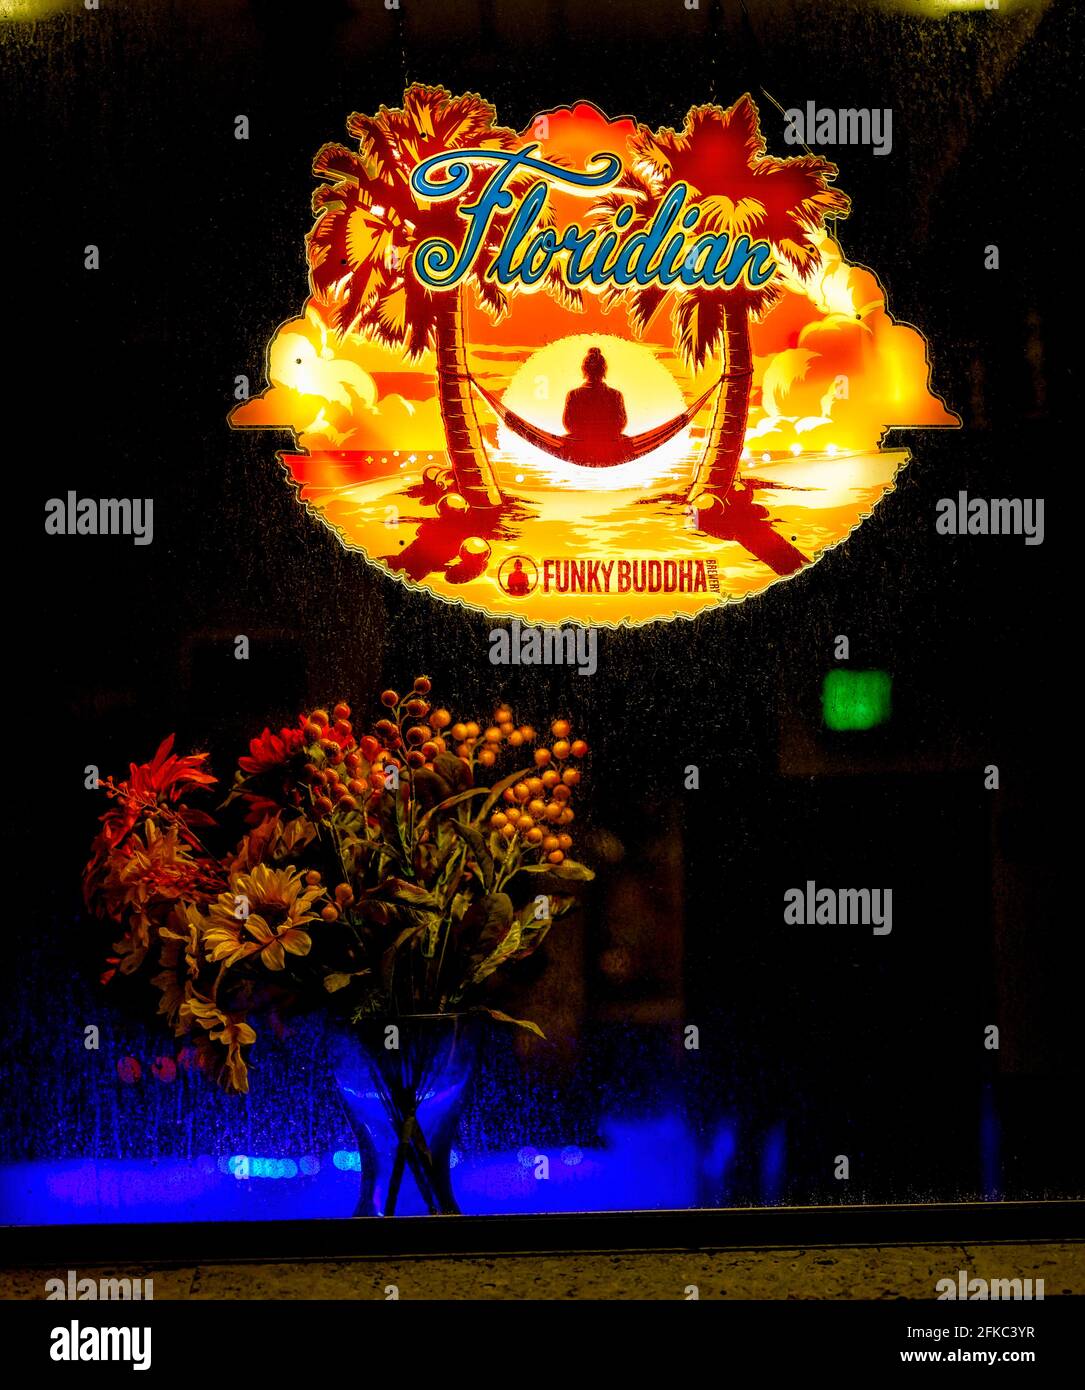 Funky Buddha Brewery Floridian illuminated Sign Stock Photo